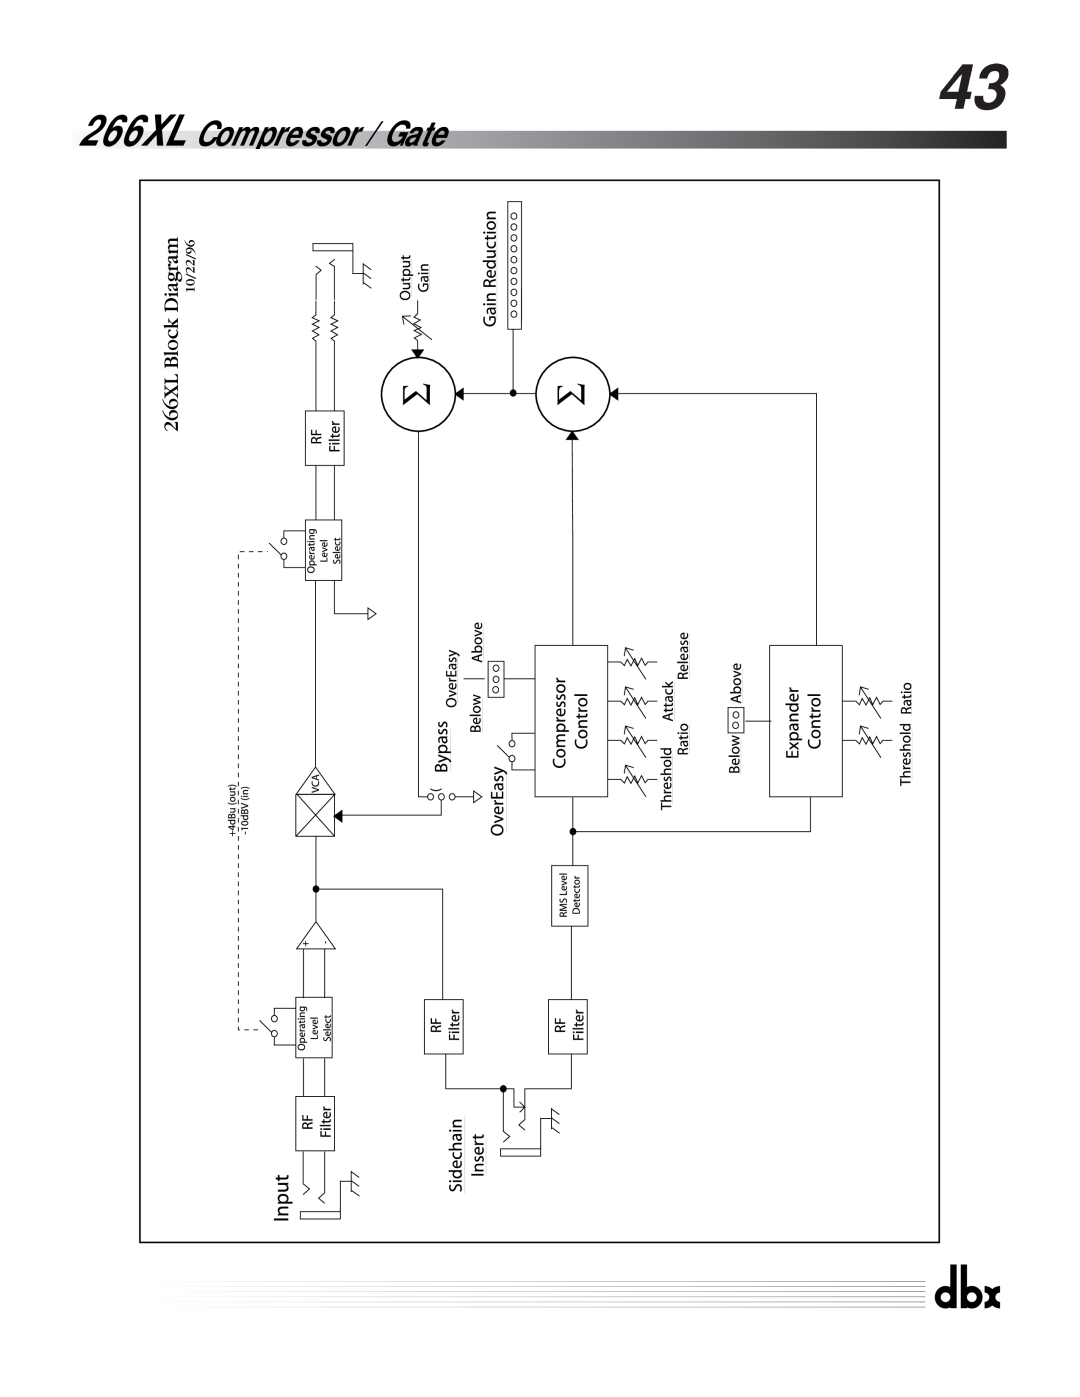 dbx Pro manuel dutilisation 266XL Compressor / Gate 